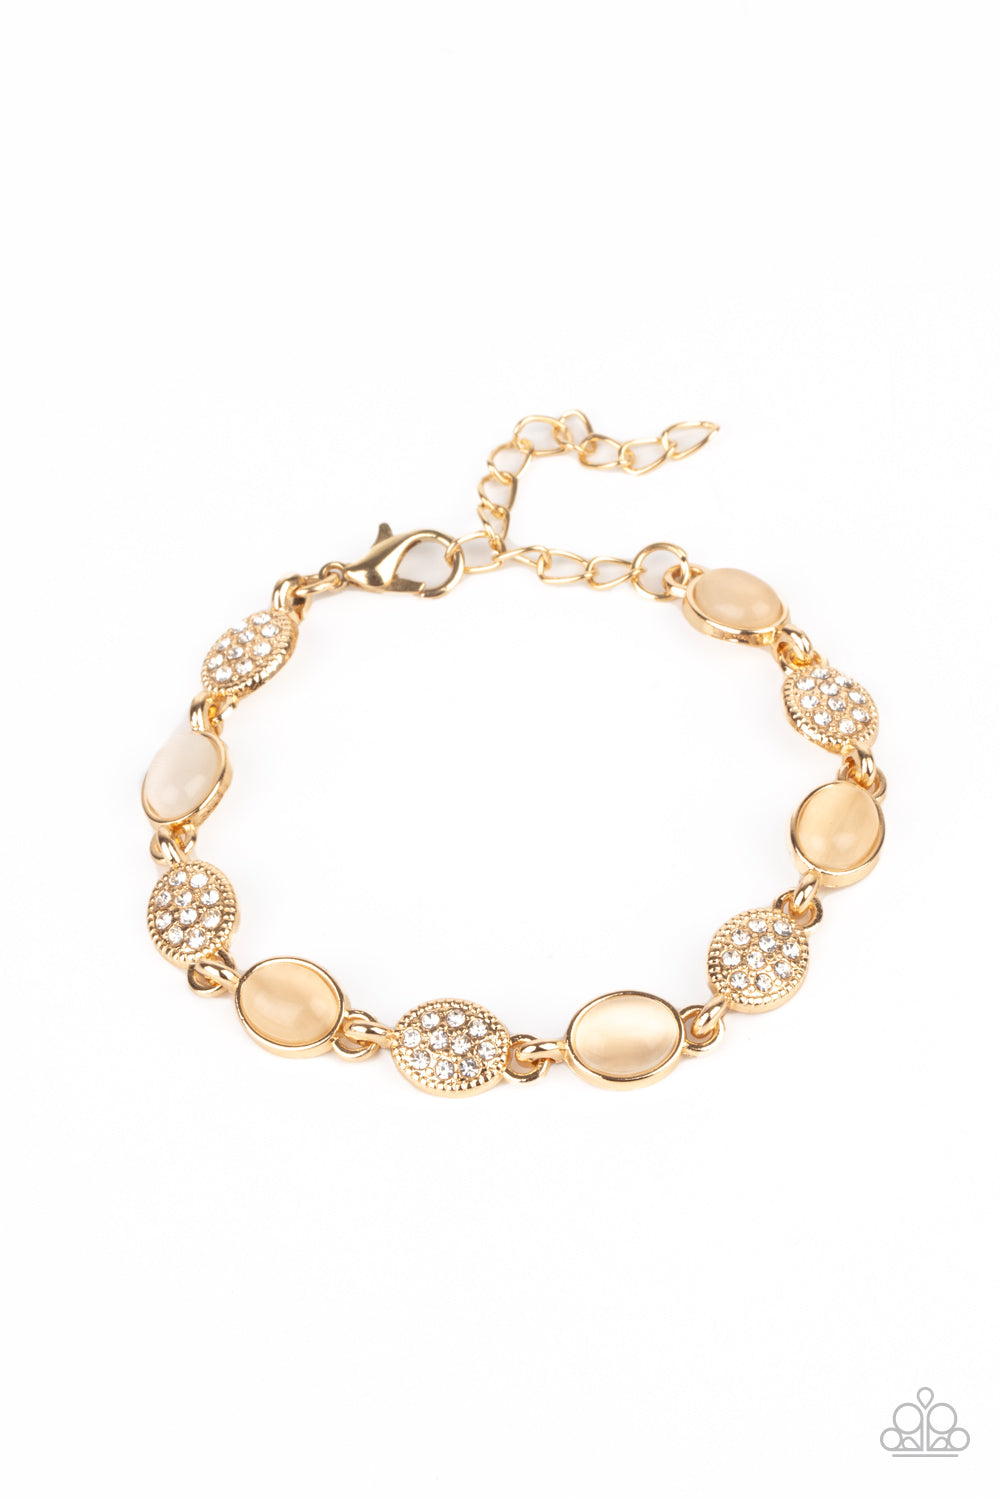 gold, gold jewelry, moonstone jewelry, bracelet, claw clasp bracelet, affordable jewelry, paparazzi accessories